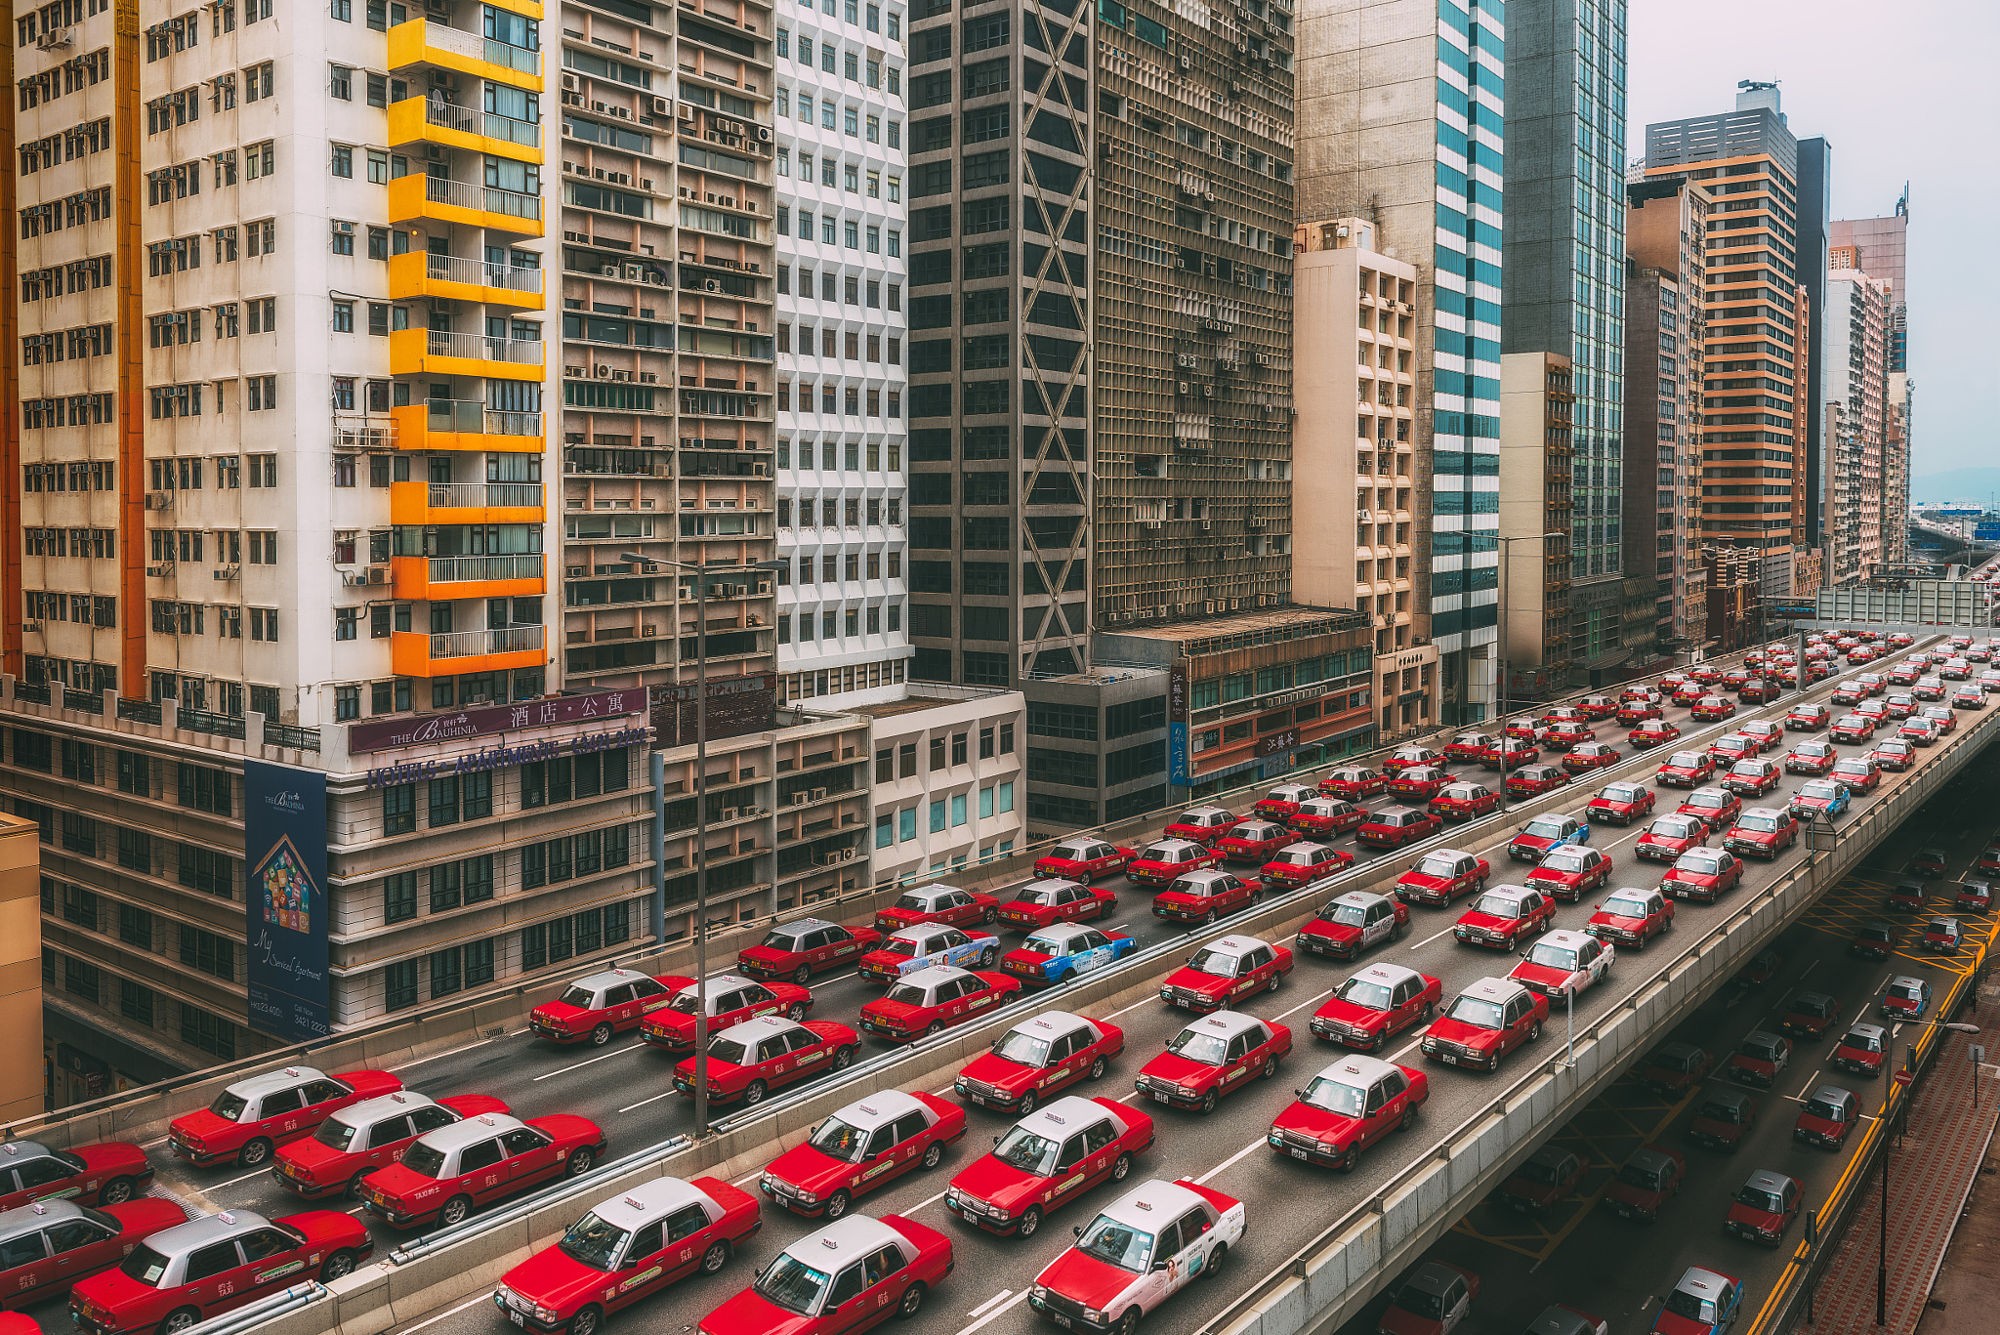 General 2000x1335 taxi Hong Kong city cityscape vehicle red cars China traffic car